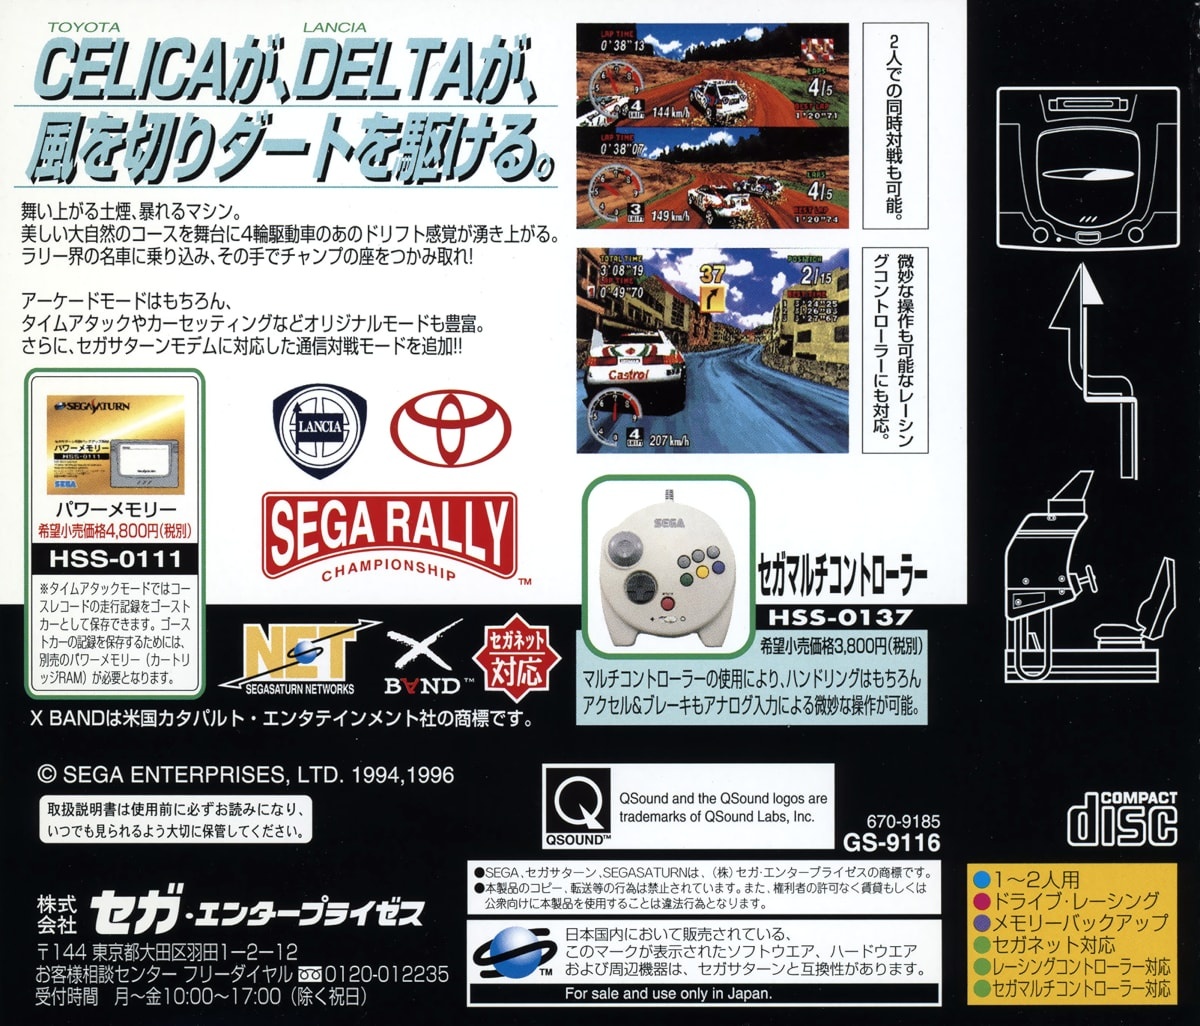 Sega Rally Championship Plus cover